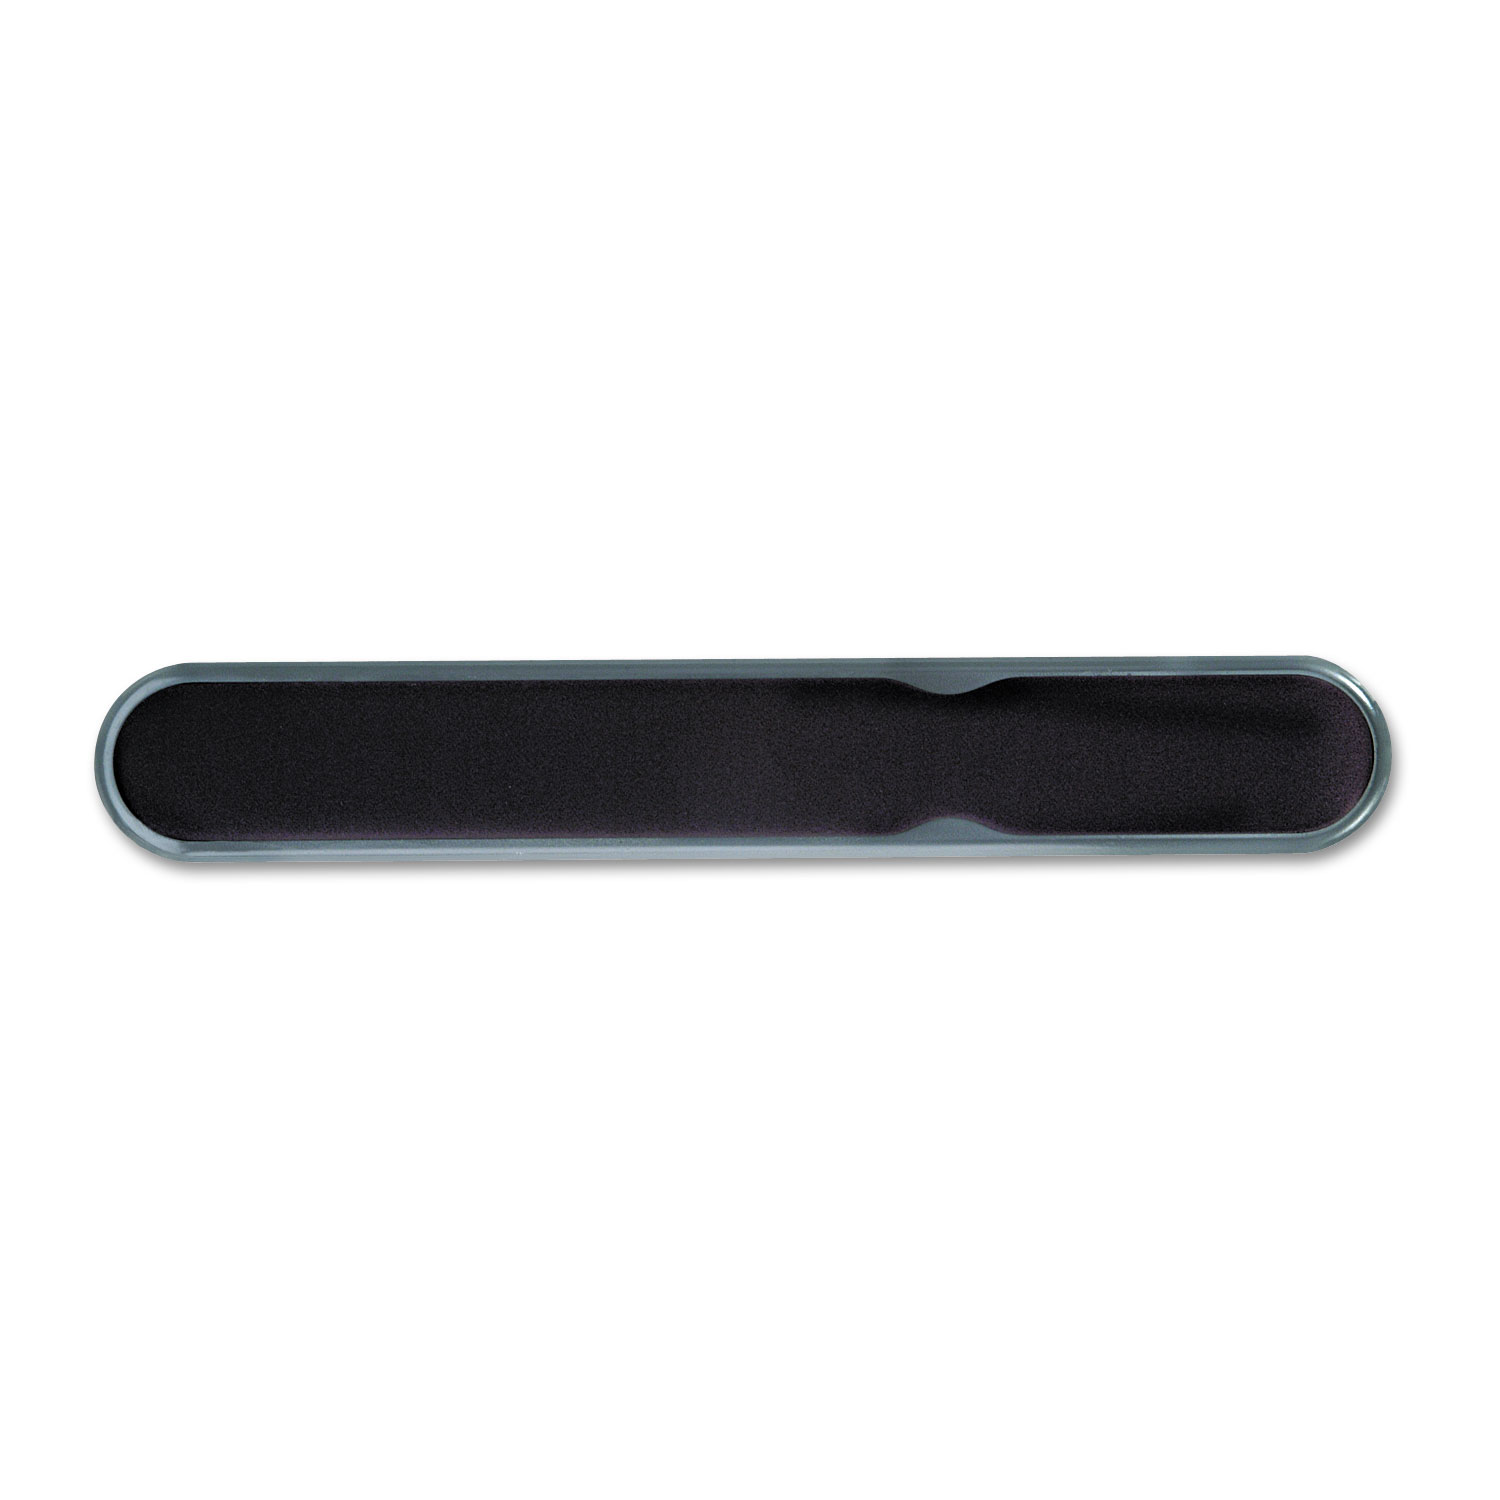 Adjustable Memory Foam Keyboard Wrist Rest with SmartFit System, Black